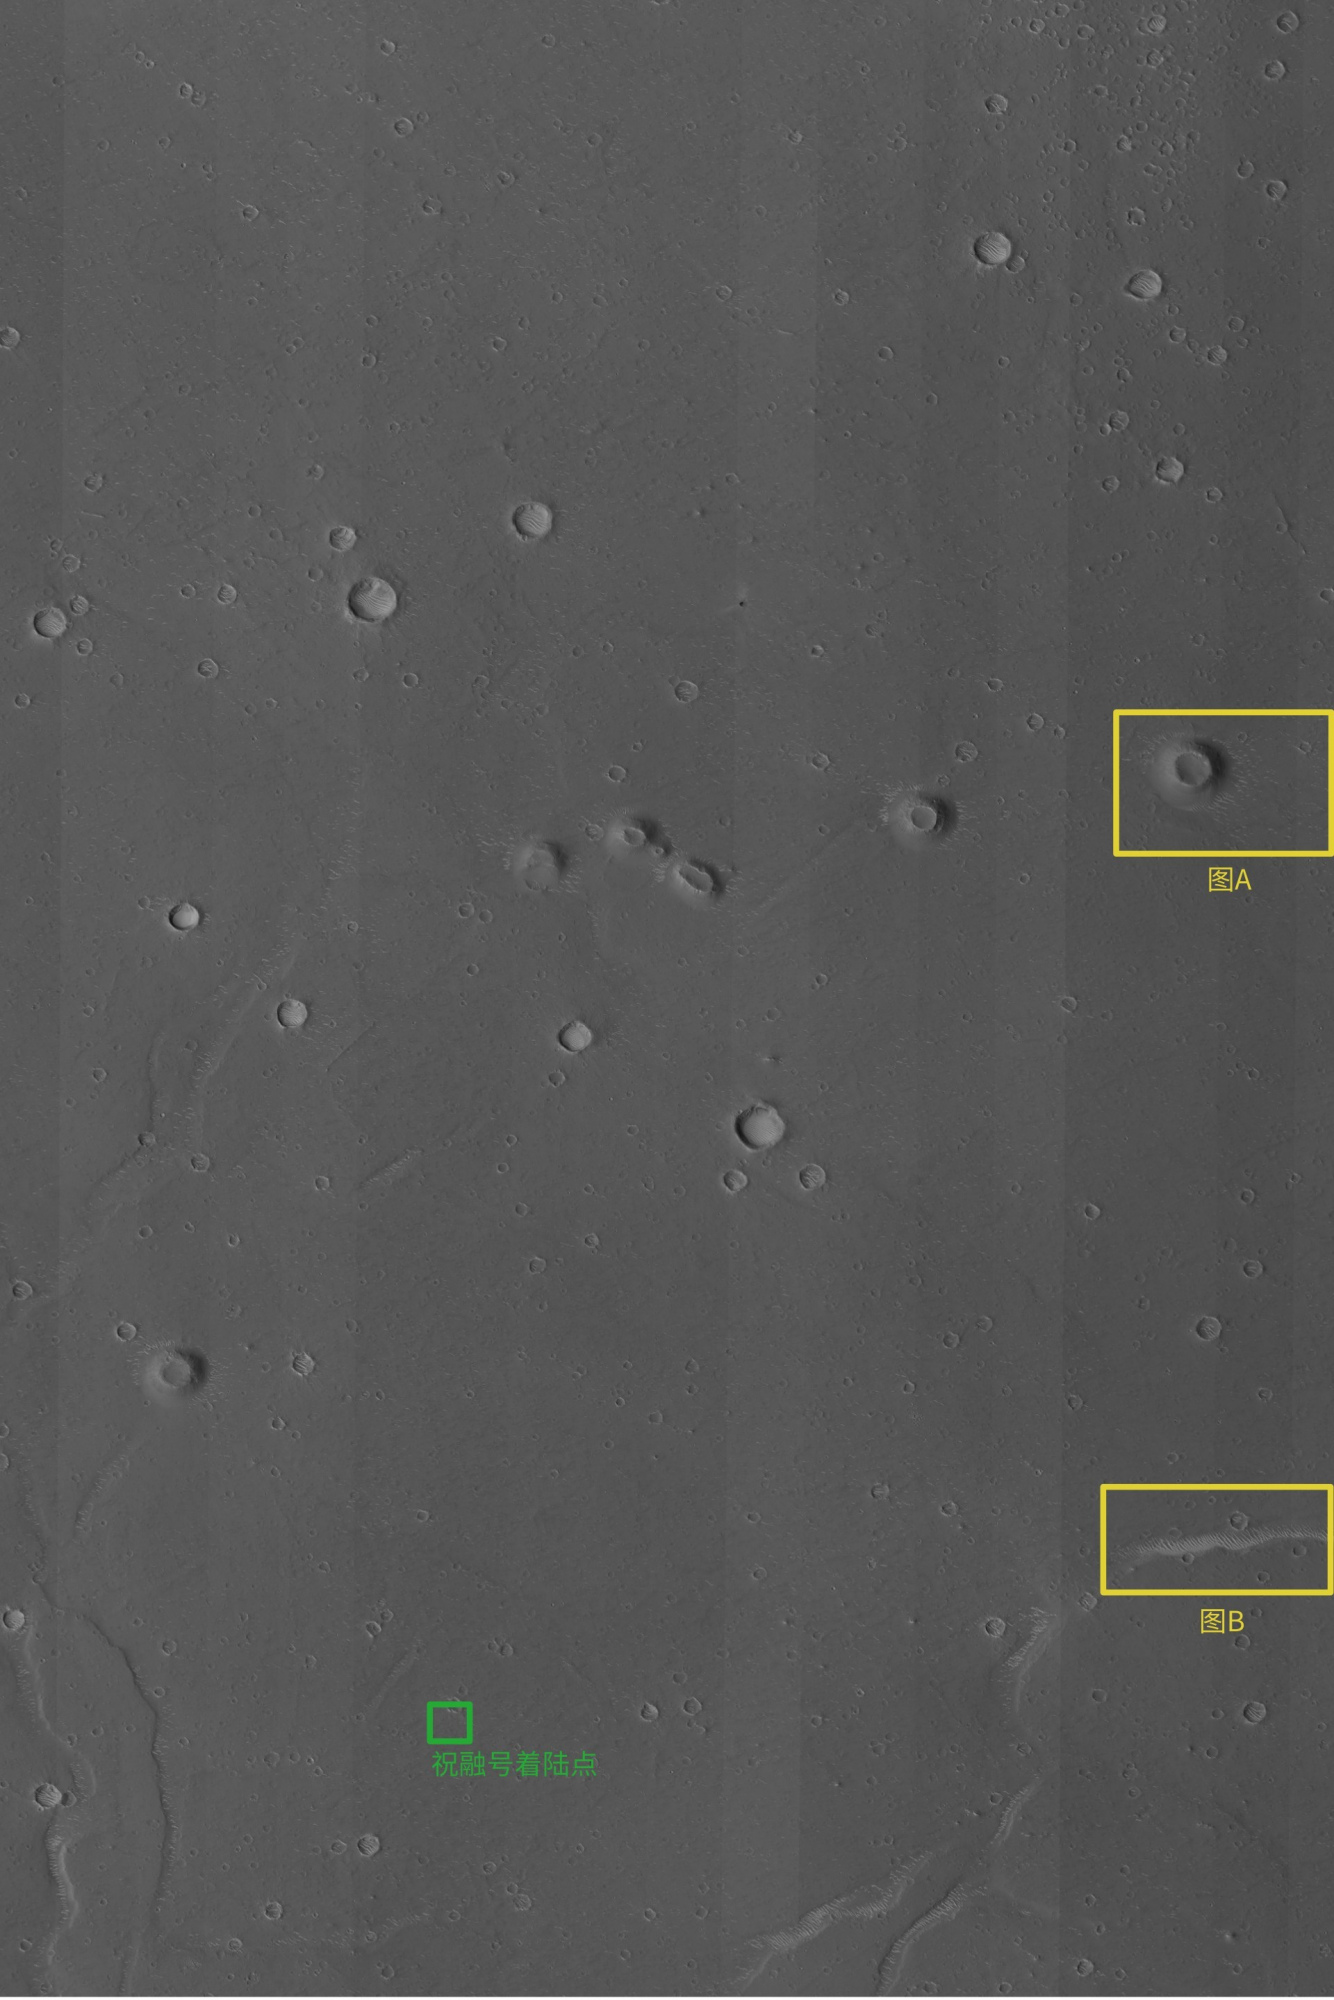 08_Tianwen-1-orbiter_HiRIC_Utopia-Planitia_landing-site_detail-boxes.thumb.jpg.16252228e2f80ec988baf77020fbd02c.jpg